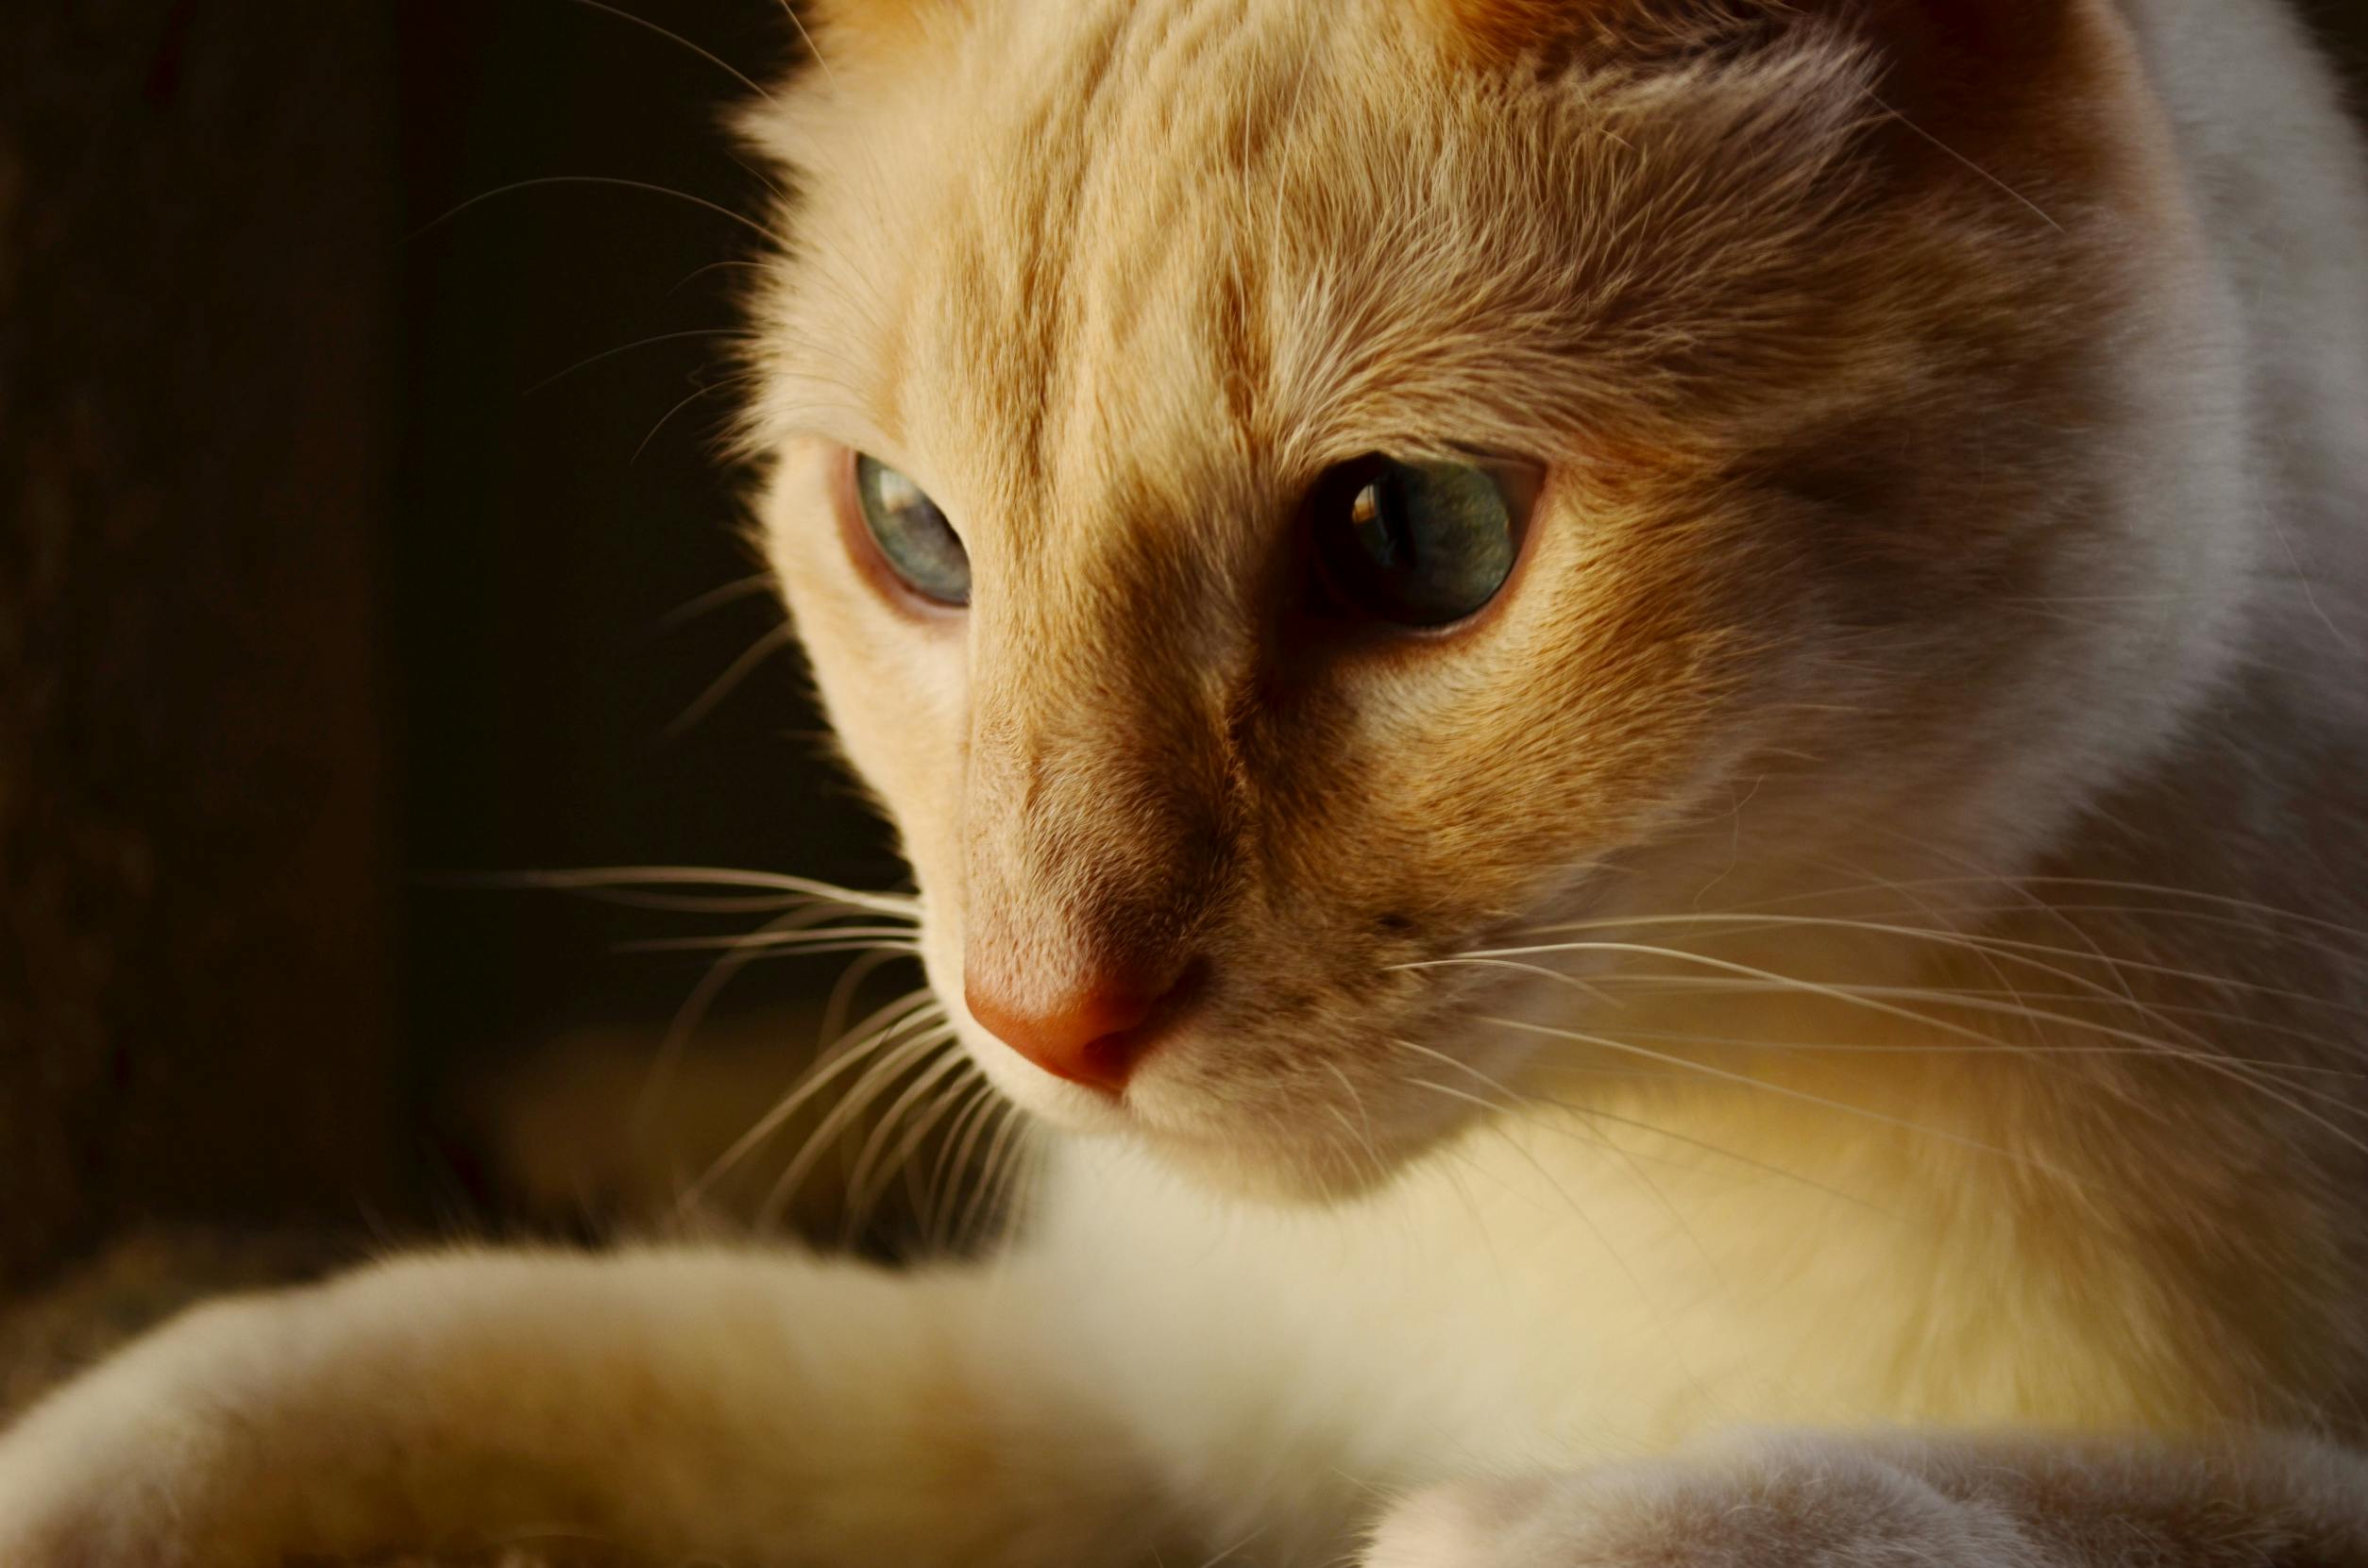 orange tabby cat with white